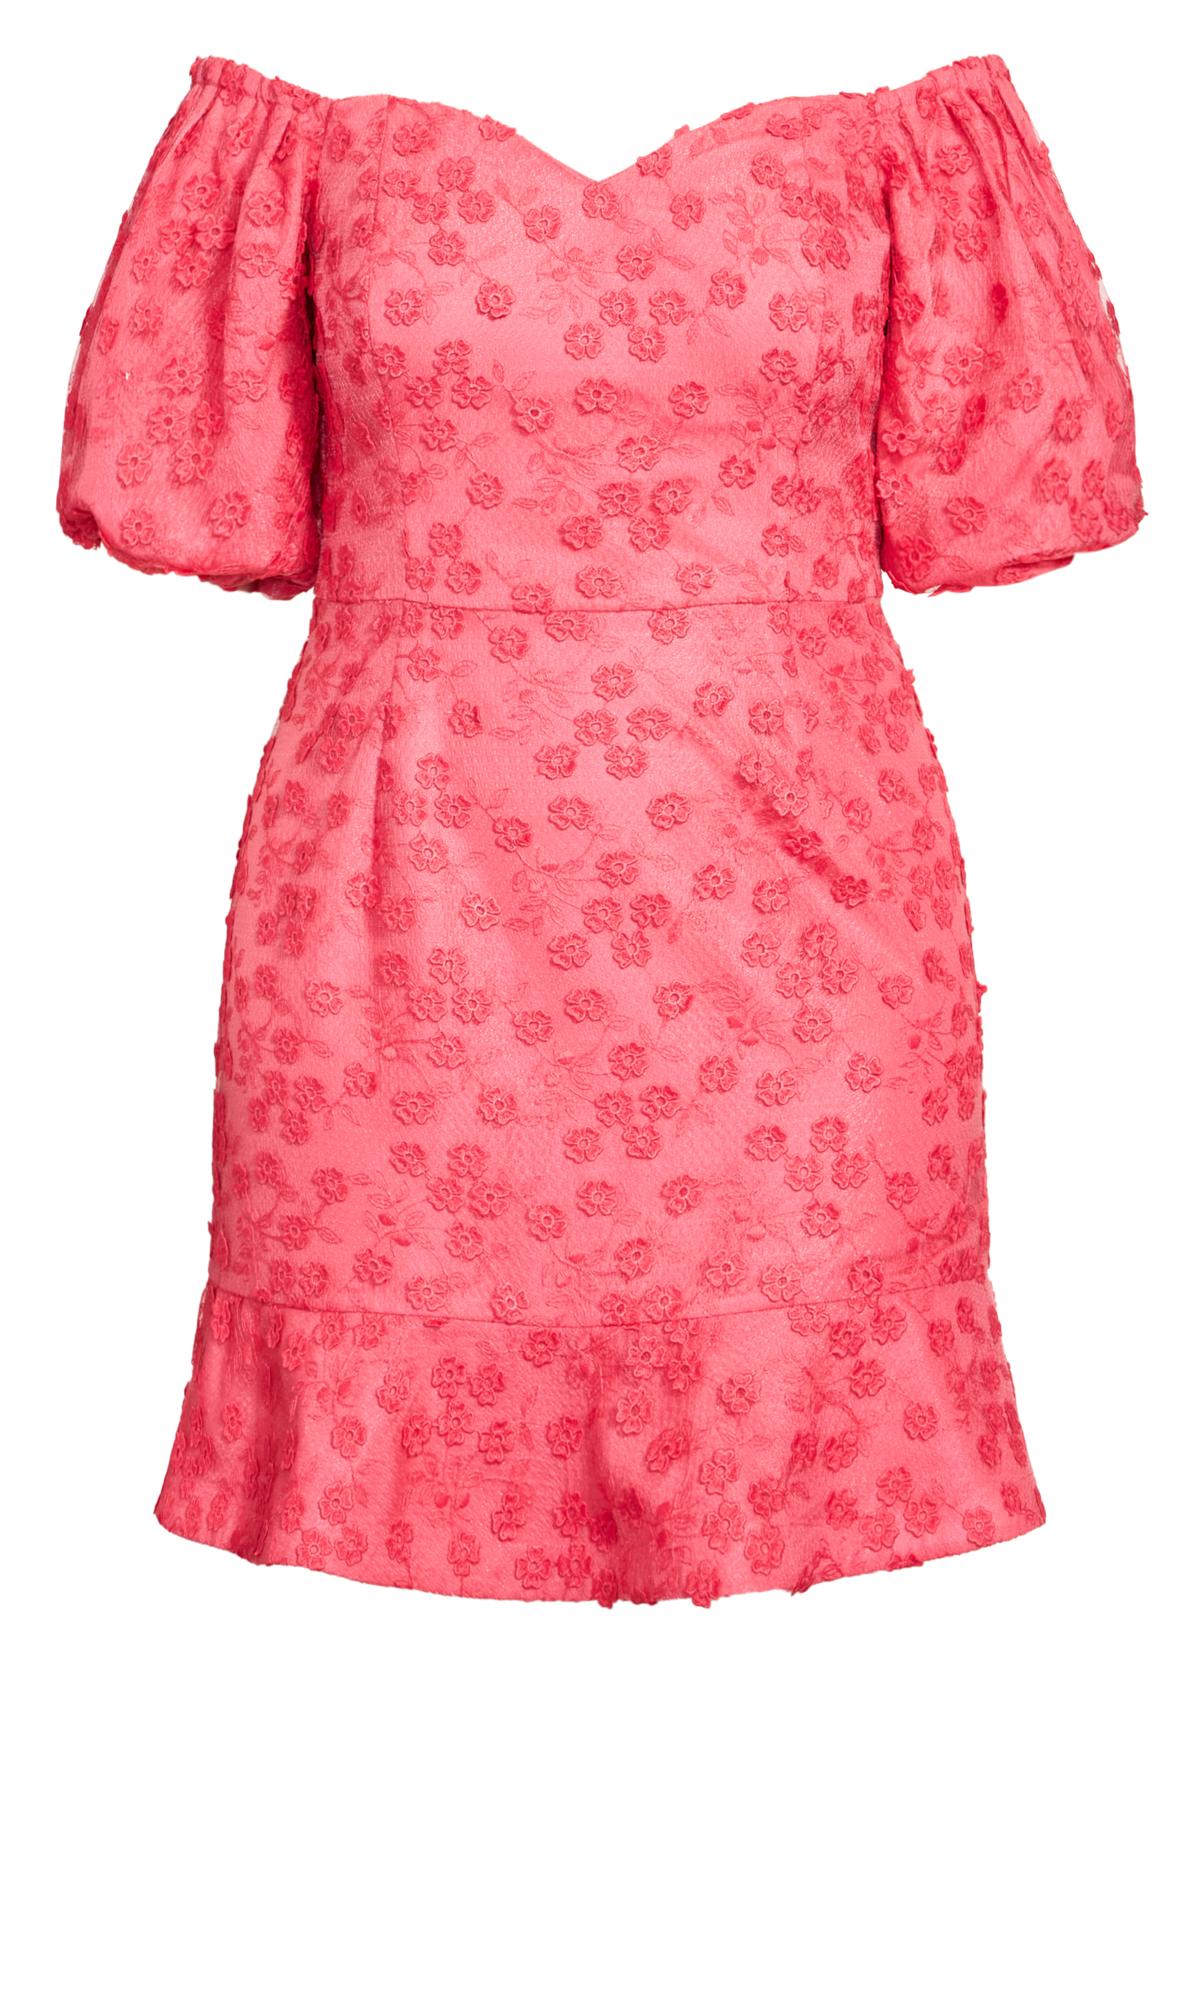 Floral Detail Pink Dress 3